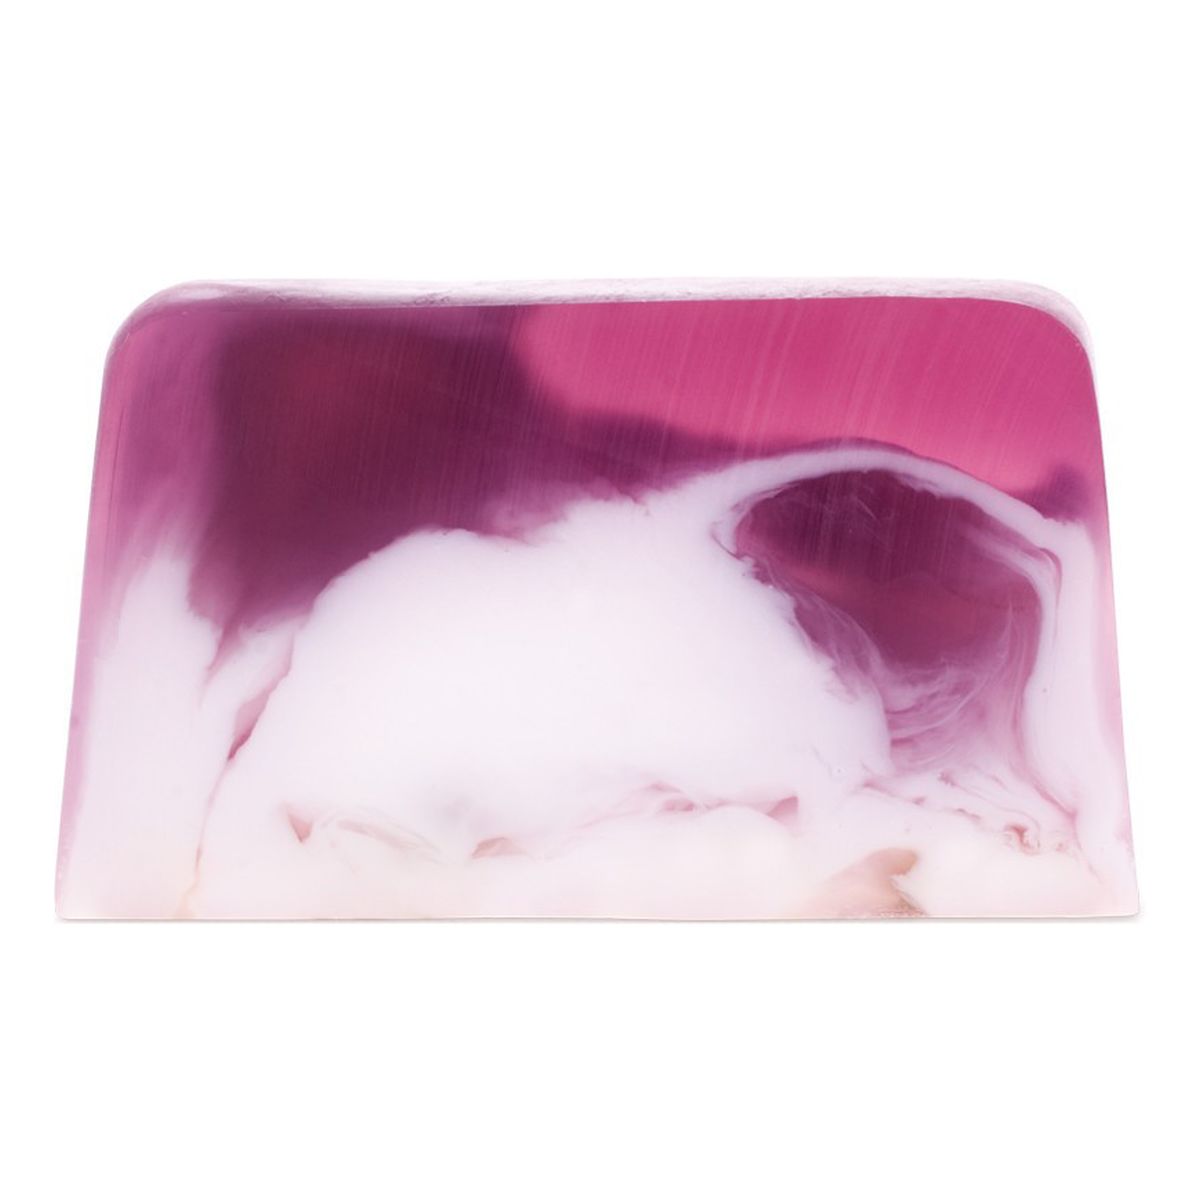 Stenders Cream Soap mydło z kremem Lavender 100g